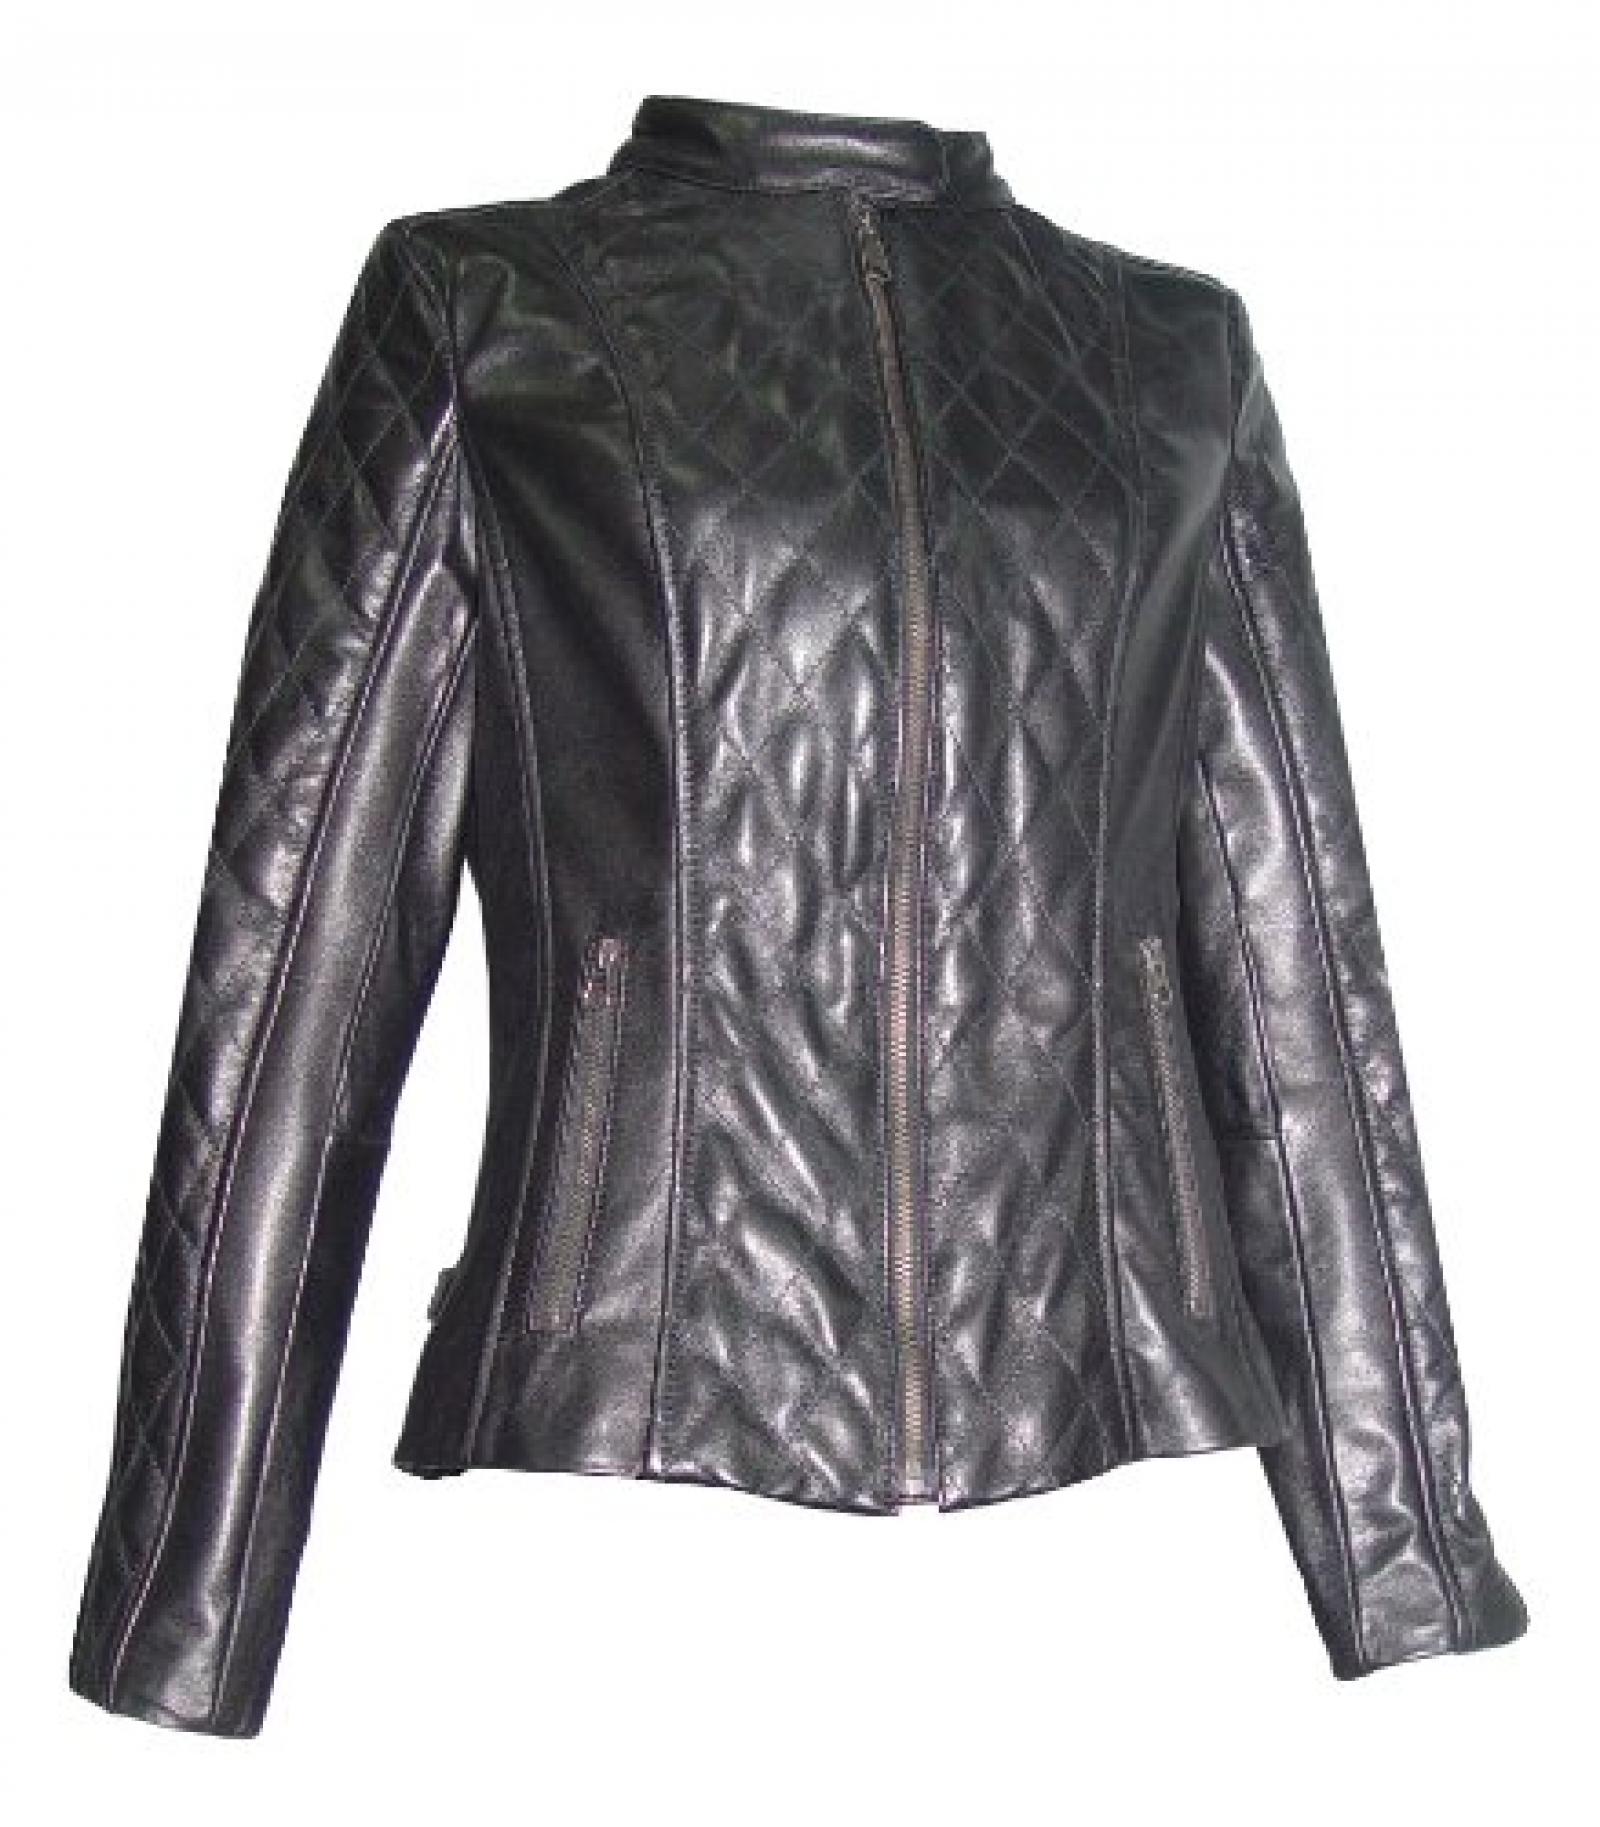 Nettailor Women PLUS SIZE 4060 Lamb Leather Quilted Moto Jacket 